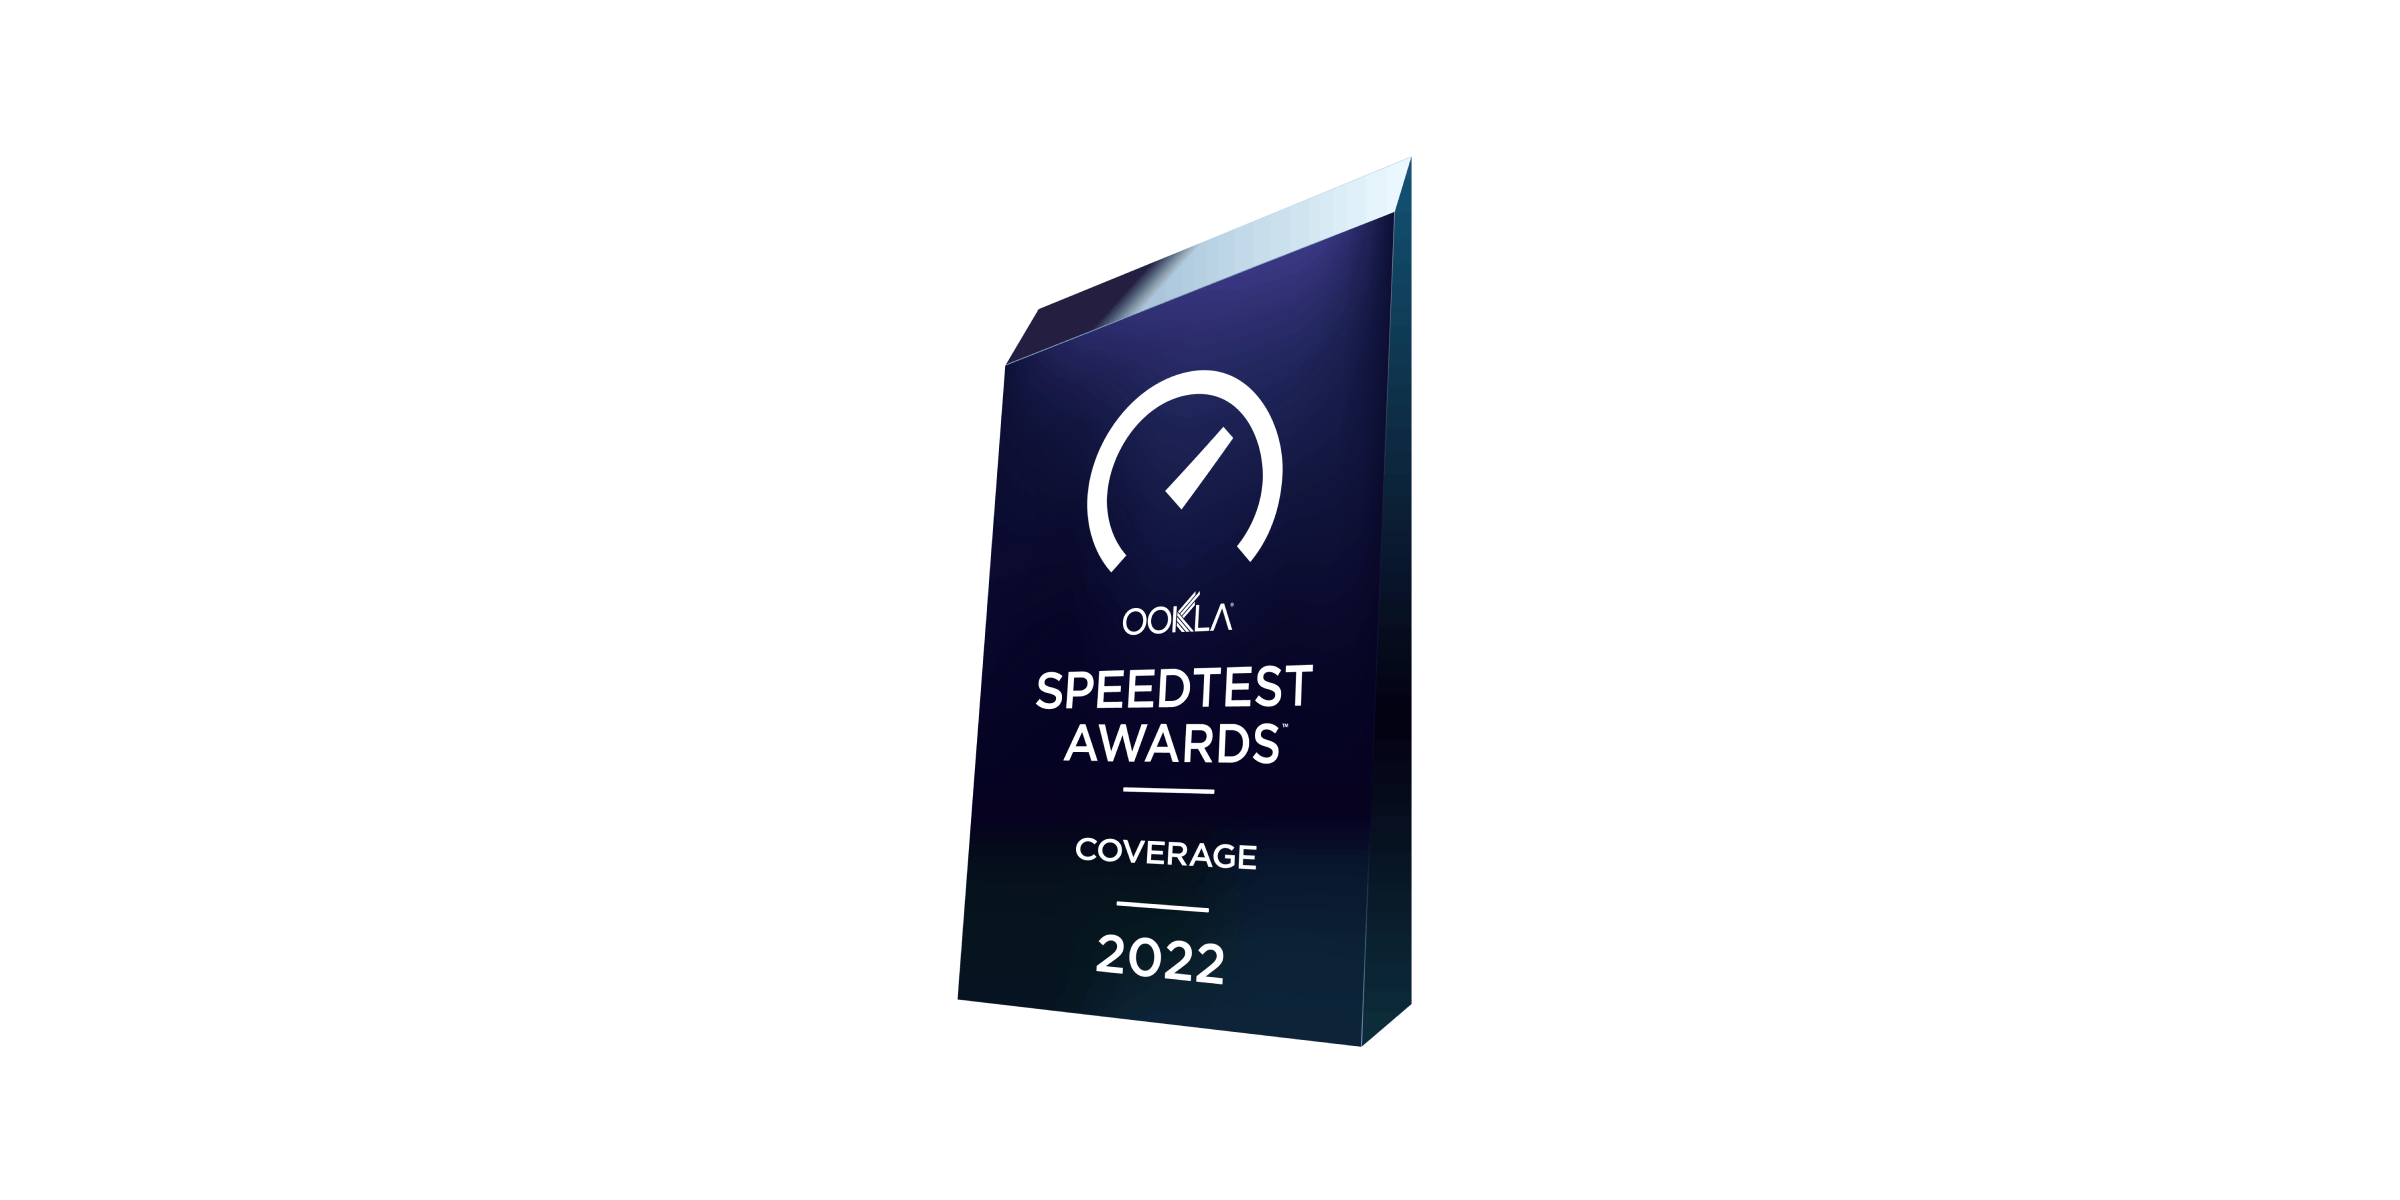 Speedtest awards : coverage 2022